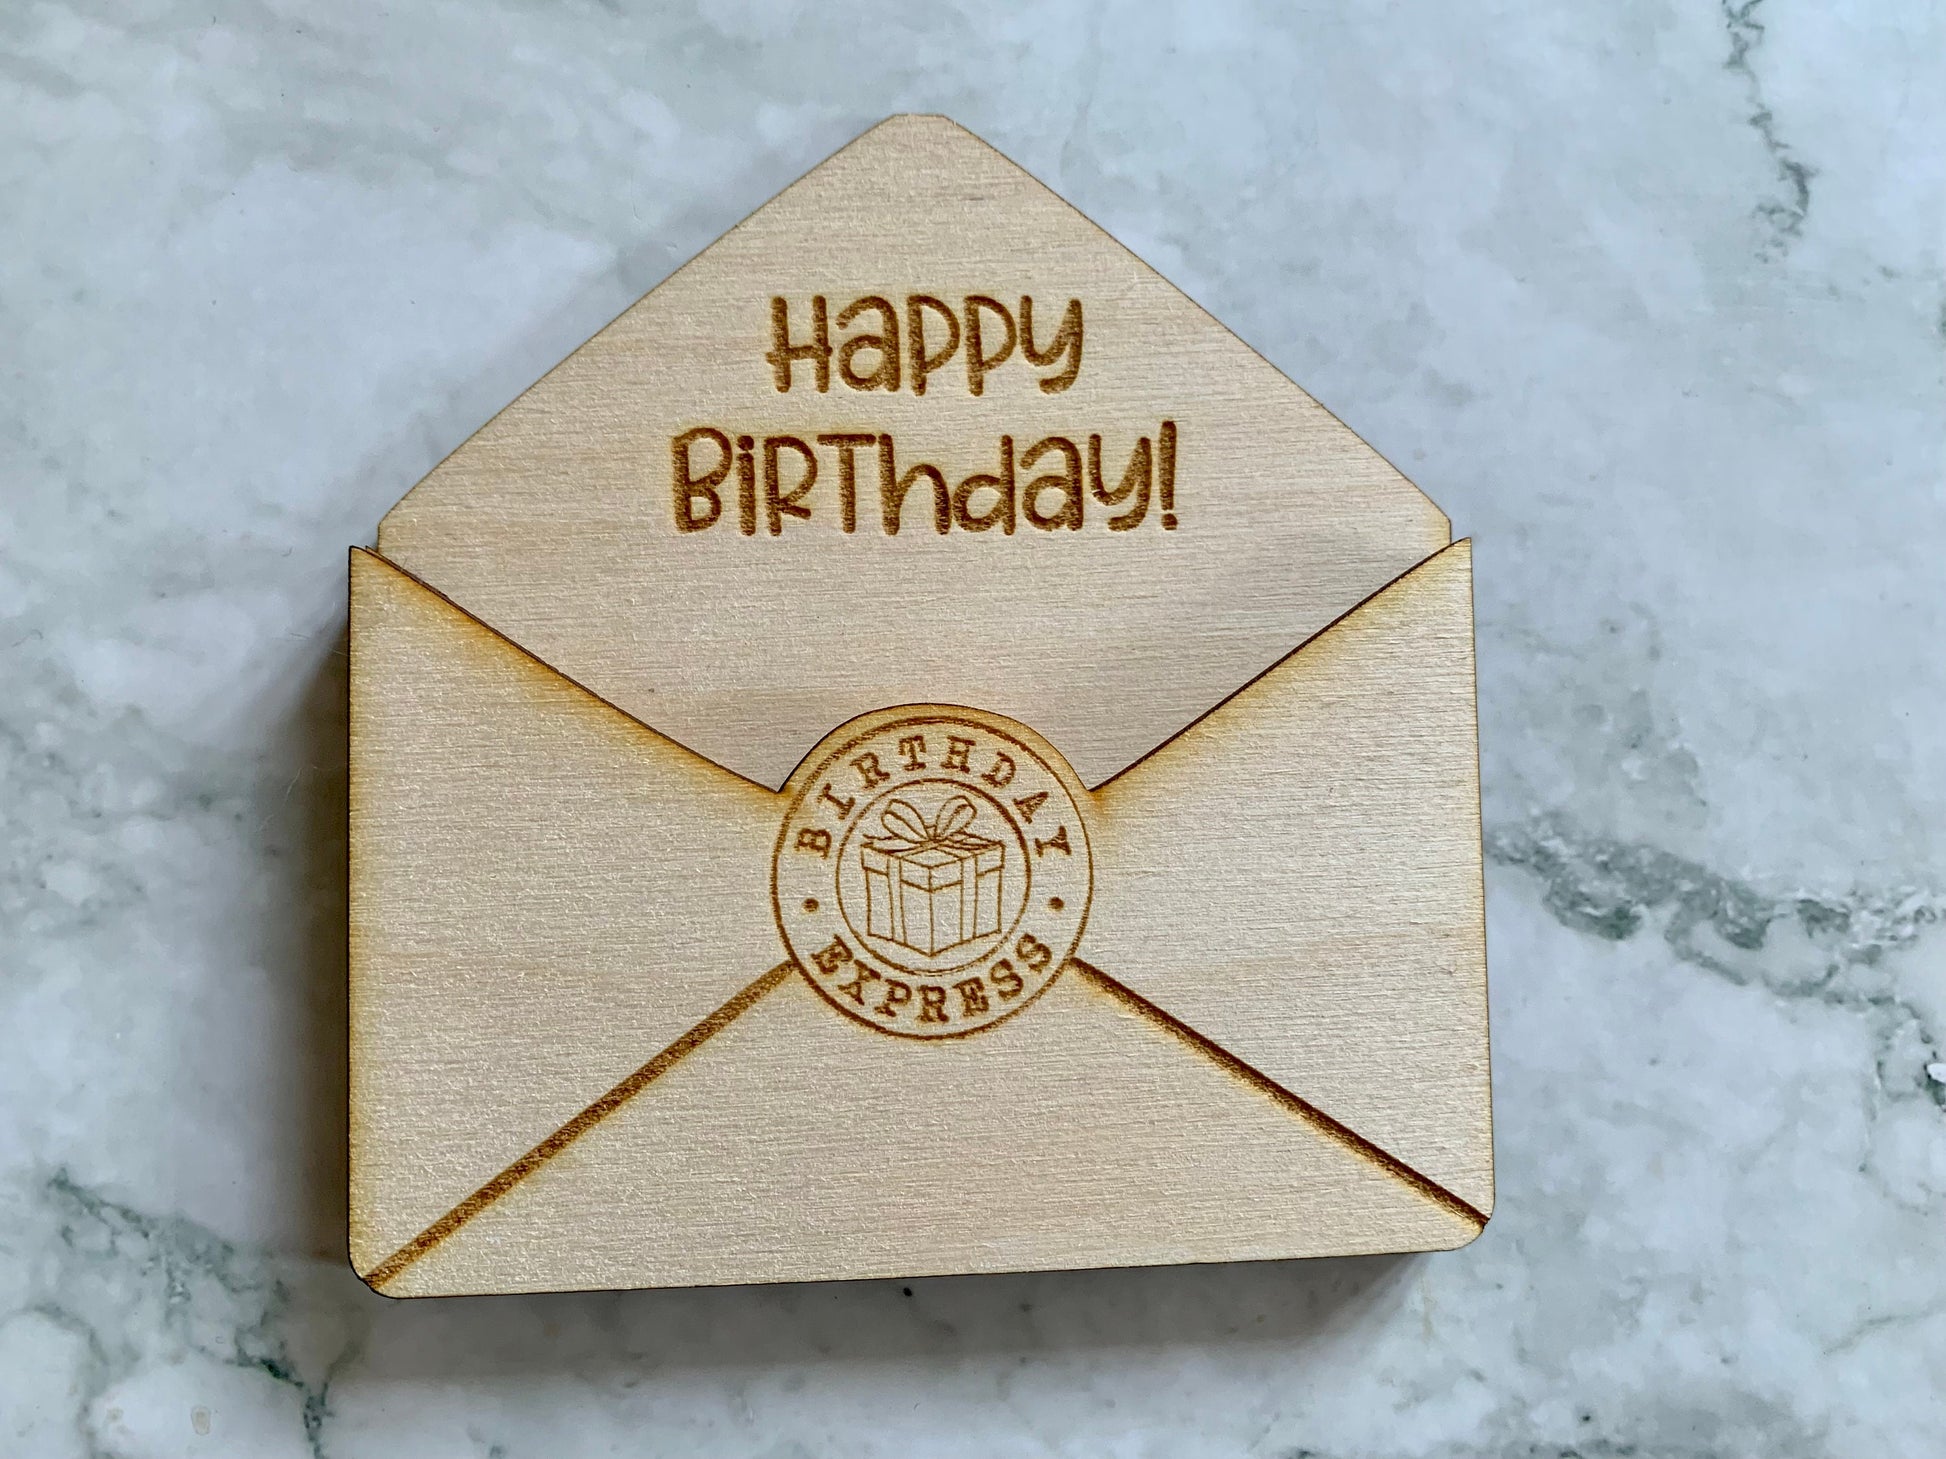 Personalised Engraved Happy Birthday Envelope Gift Card Holder - Resplendent Aurora